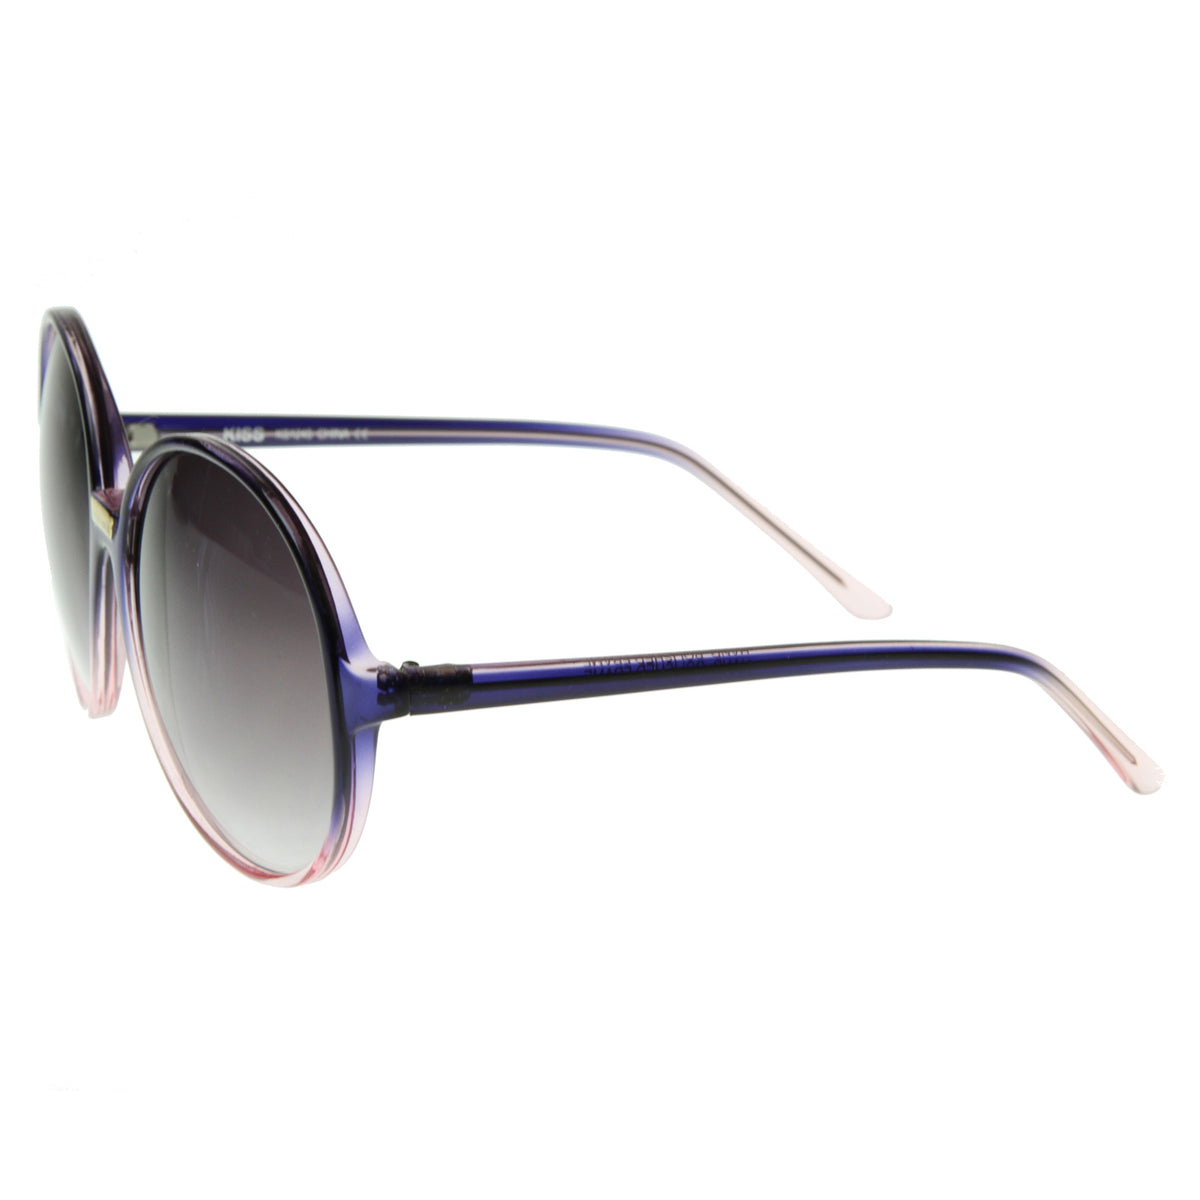 Designer Inspired Oversized Round Circle Fashion Sunglasses - sunglass.la